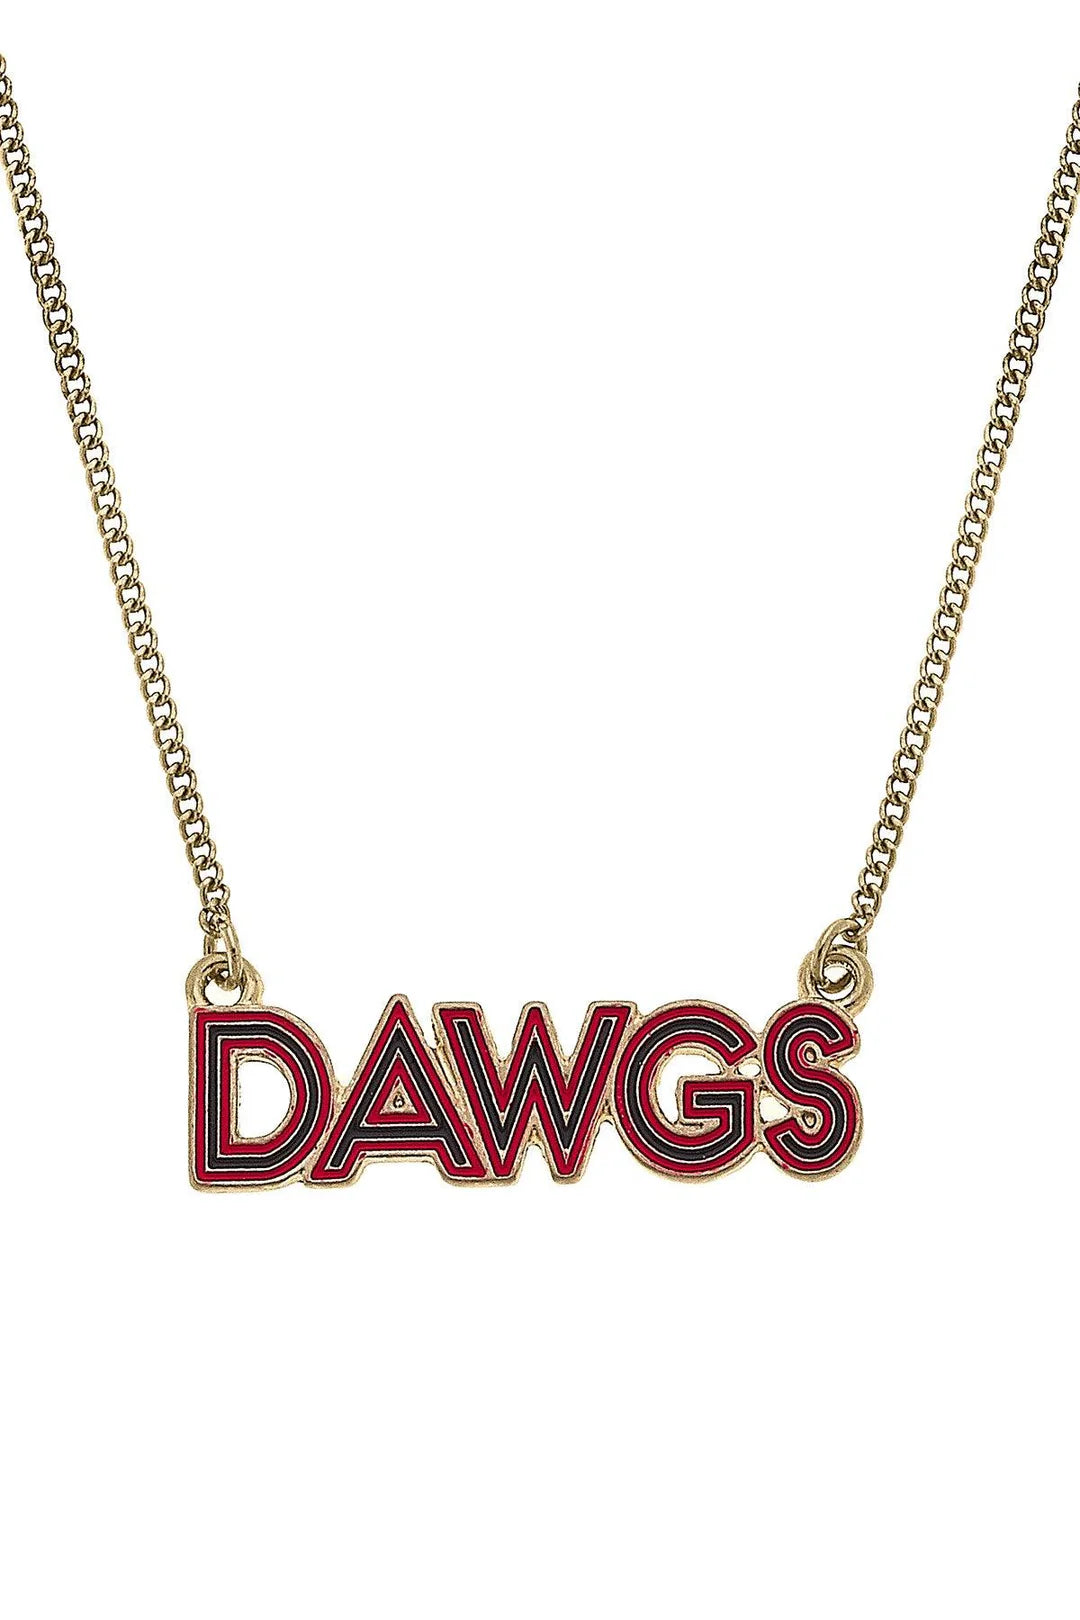 Georgia Bulldogs Outline Enamel Necklace